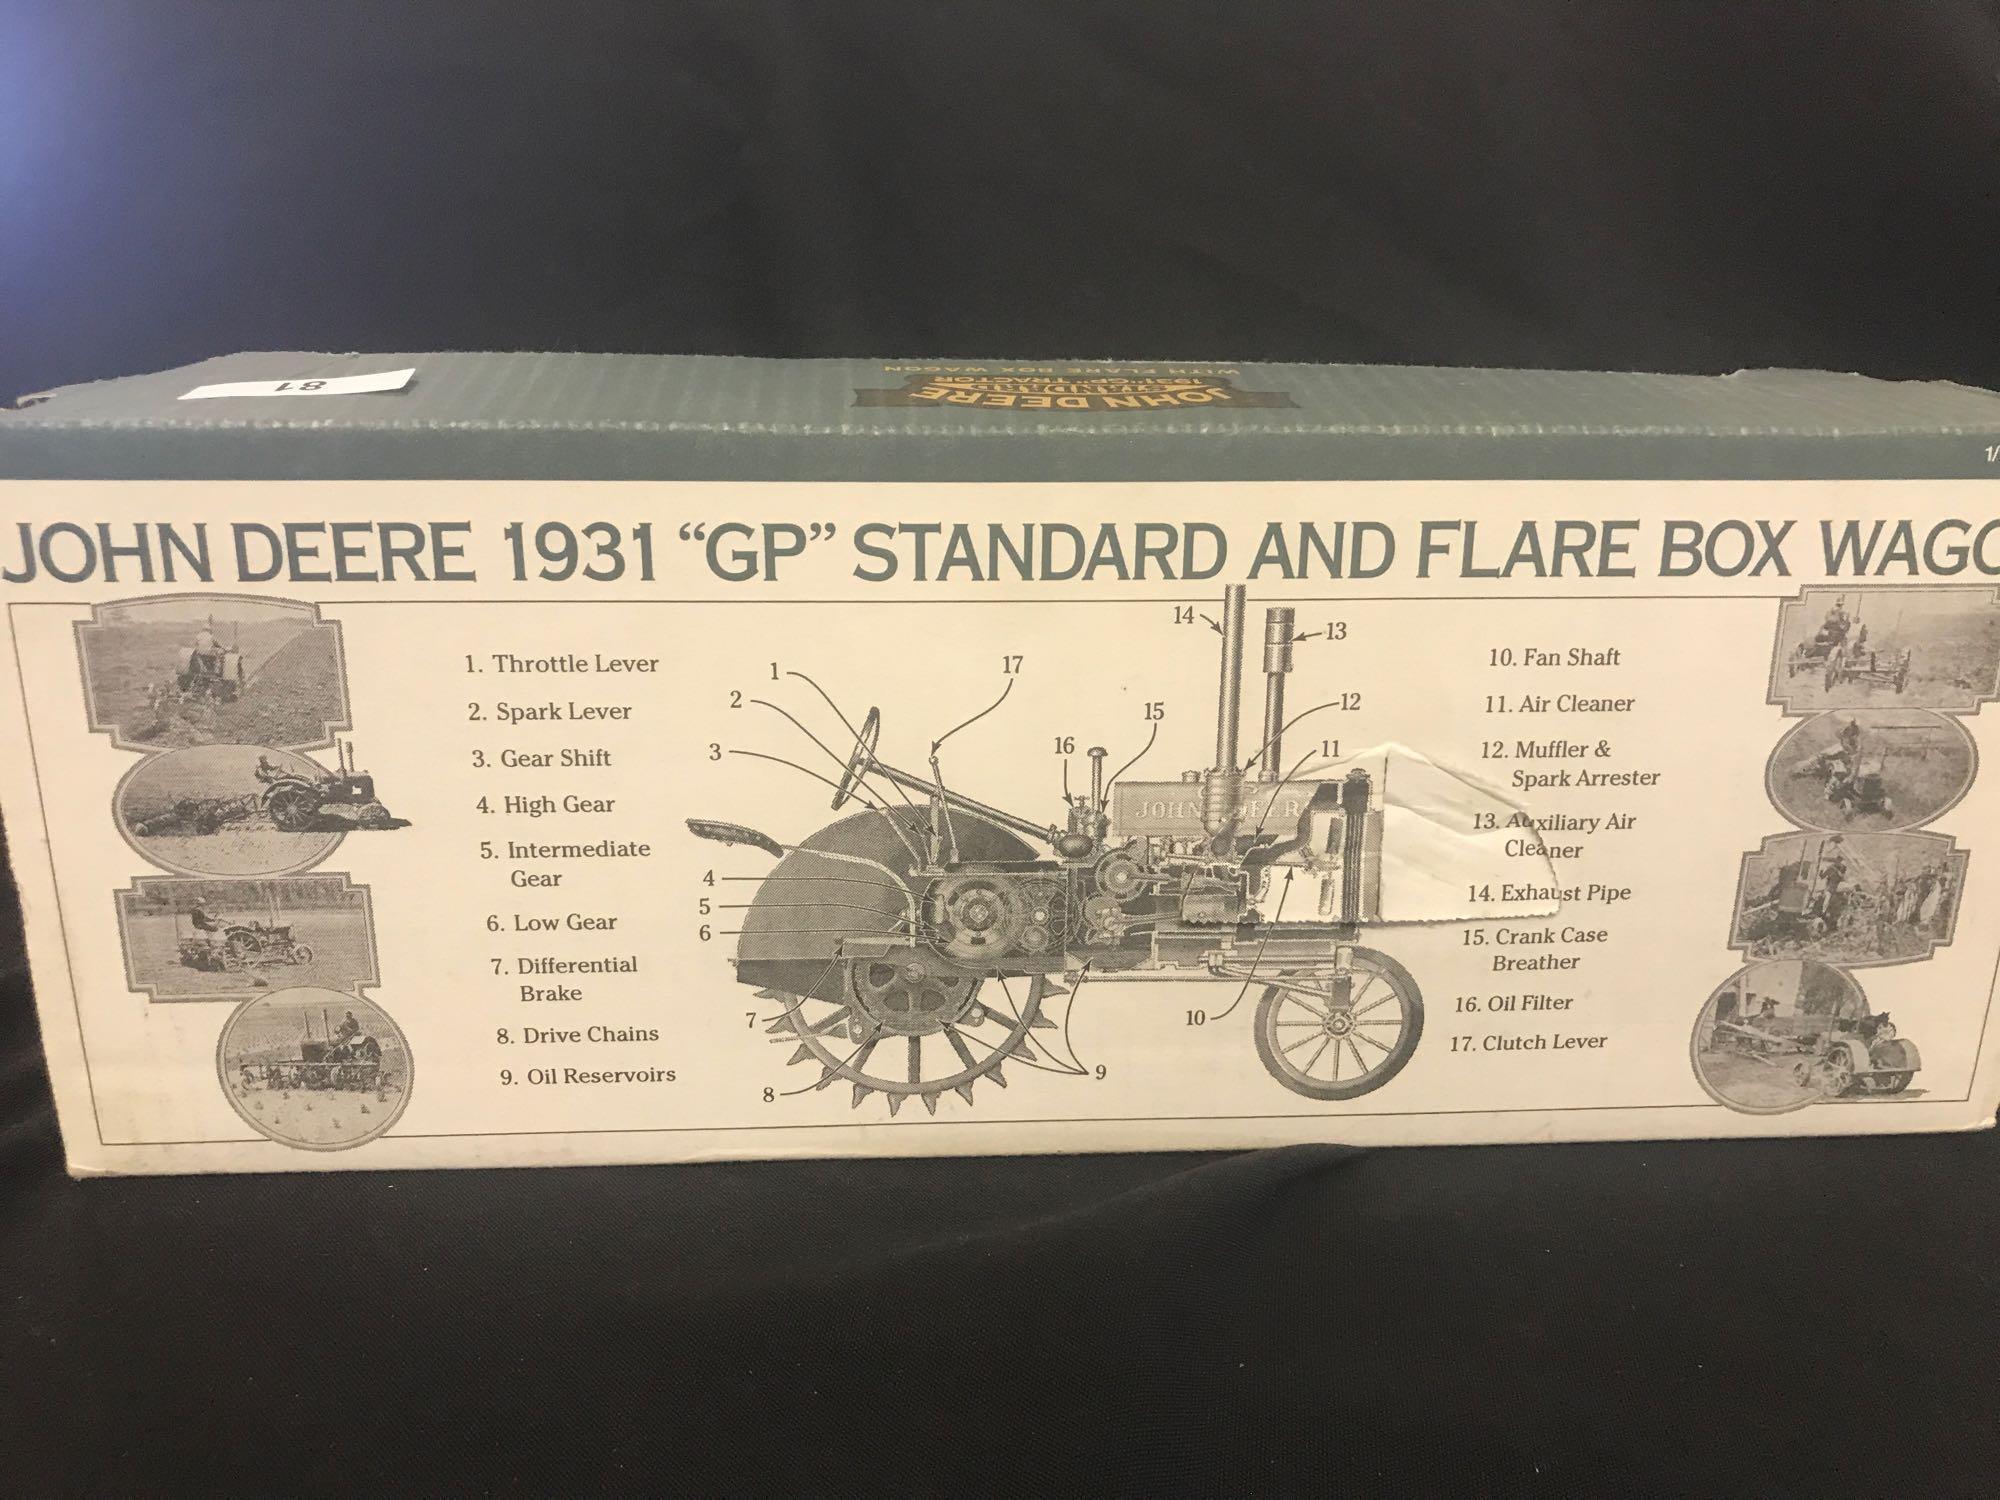 John Deere "GP" Tractor with Flare Box Wagon